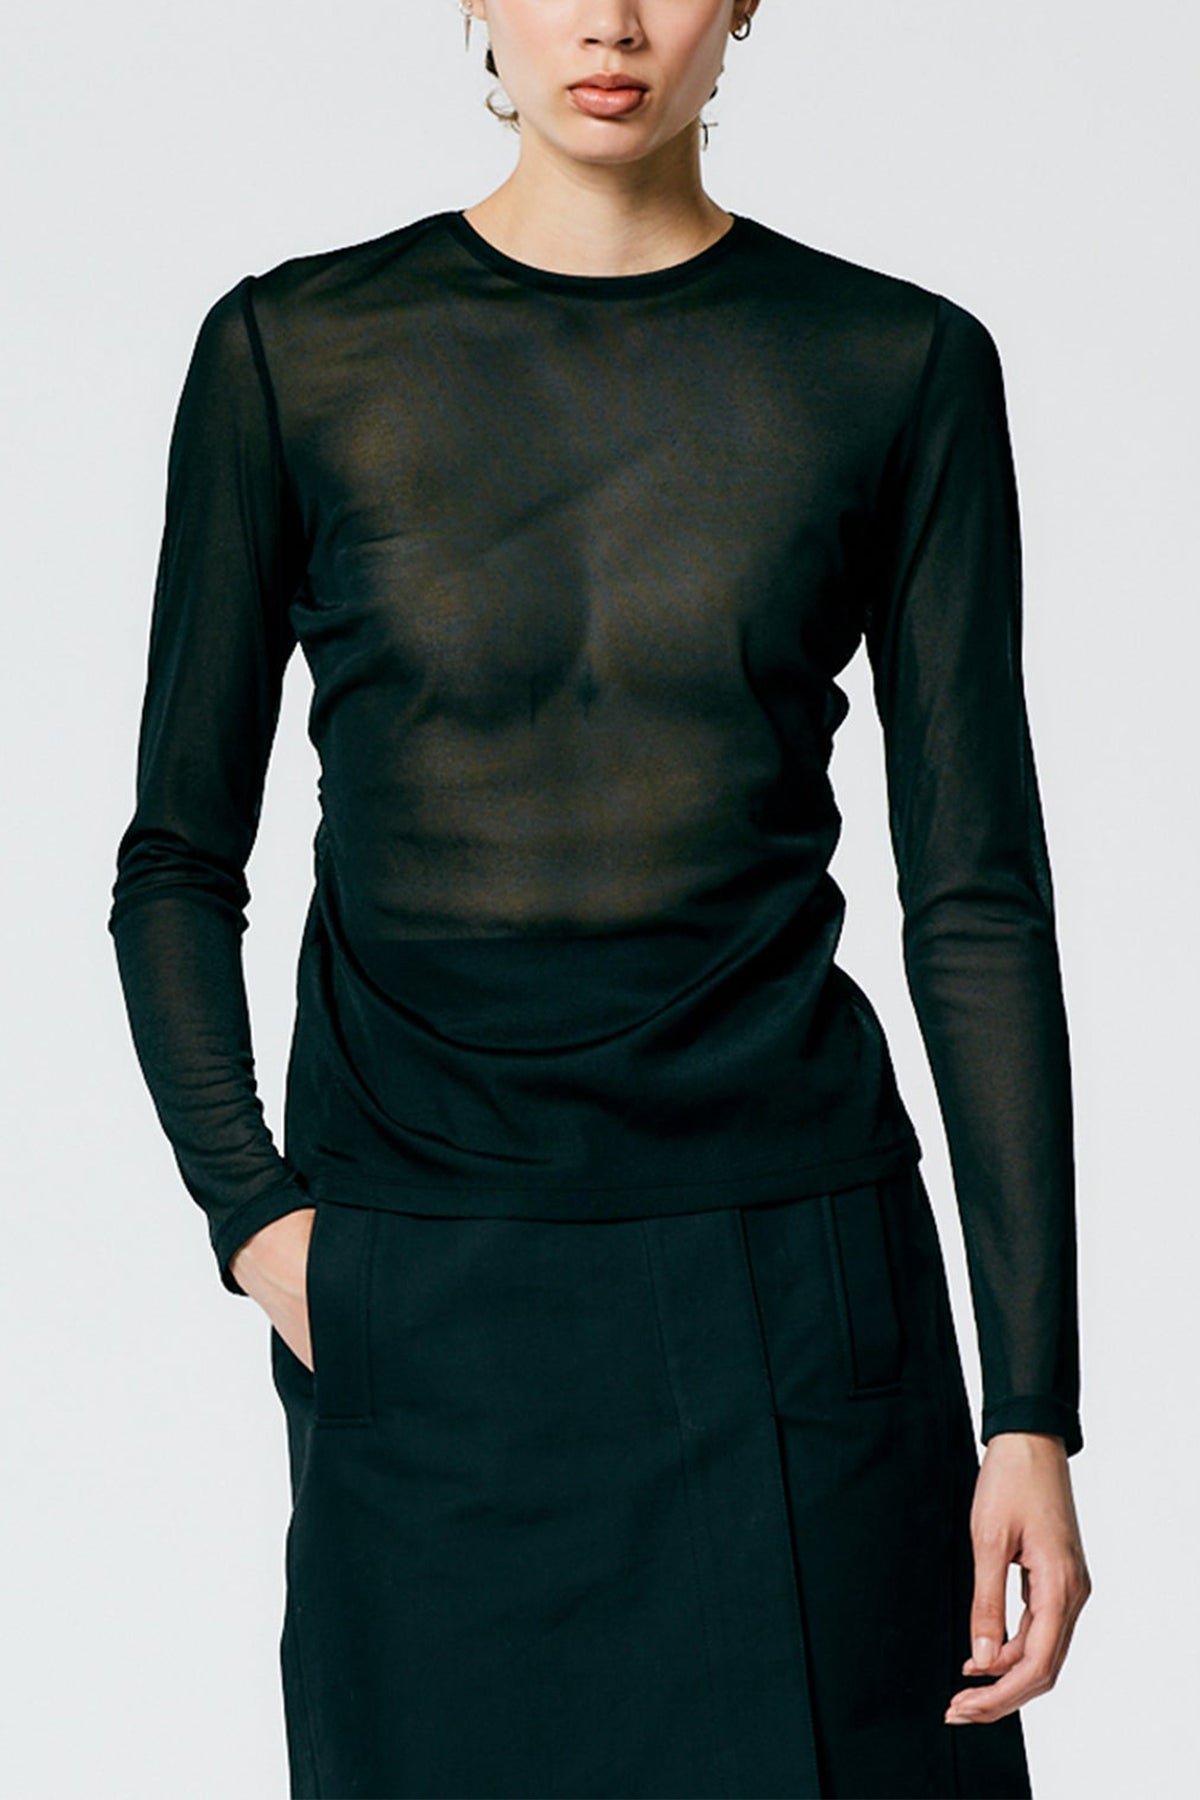 Sheer Gauze Long Sleeve Top With Pintuck Detail in Black - shop-olivia.com